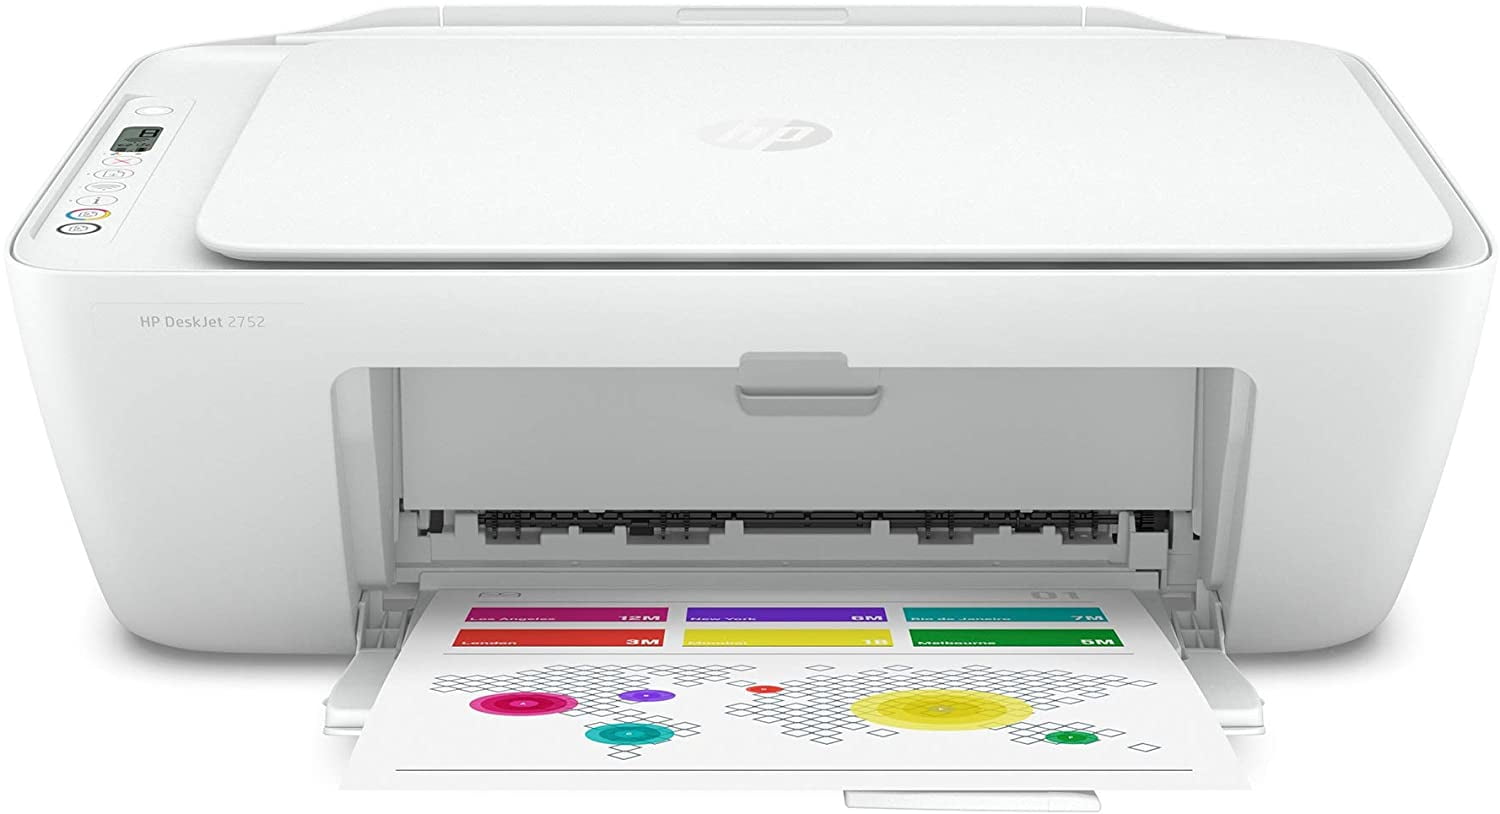 Renewed HP Deskjet 3630 All-in-One Printer 